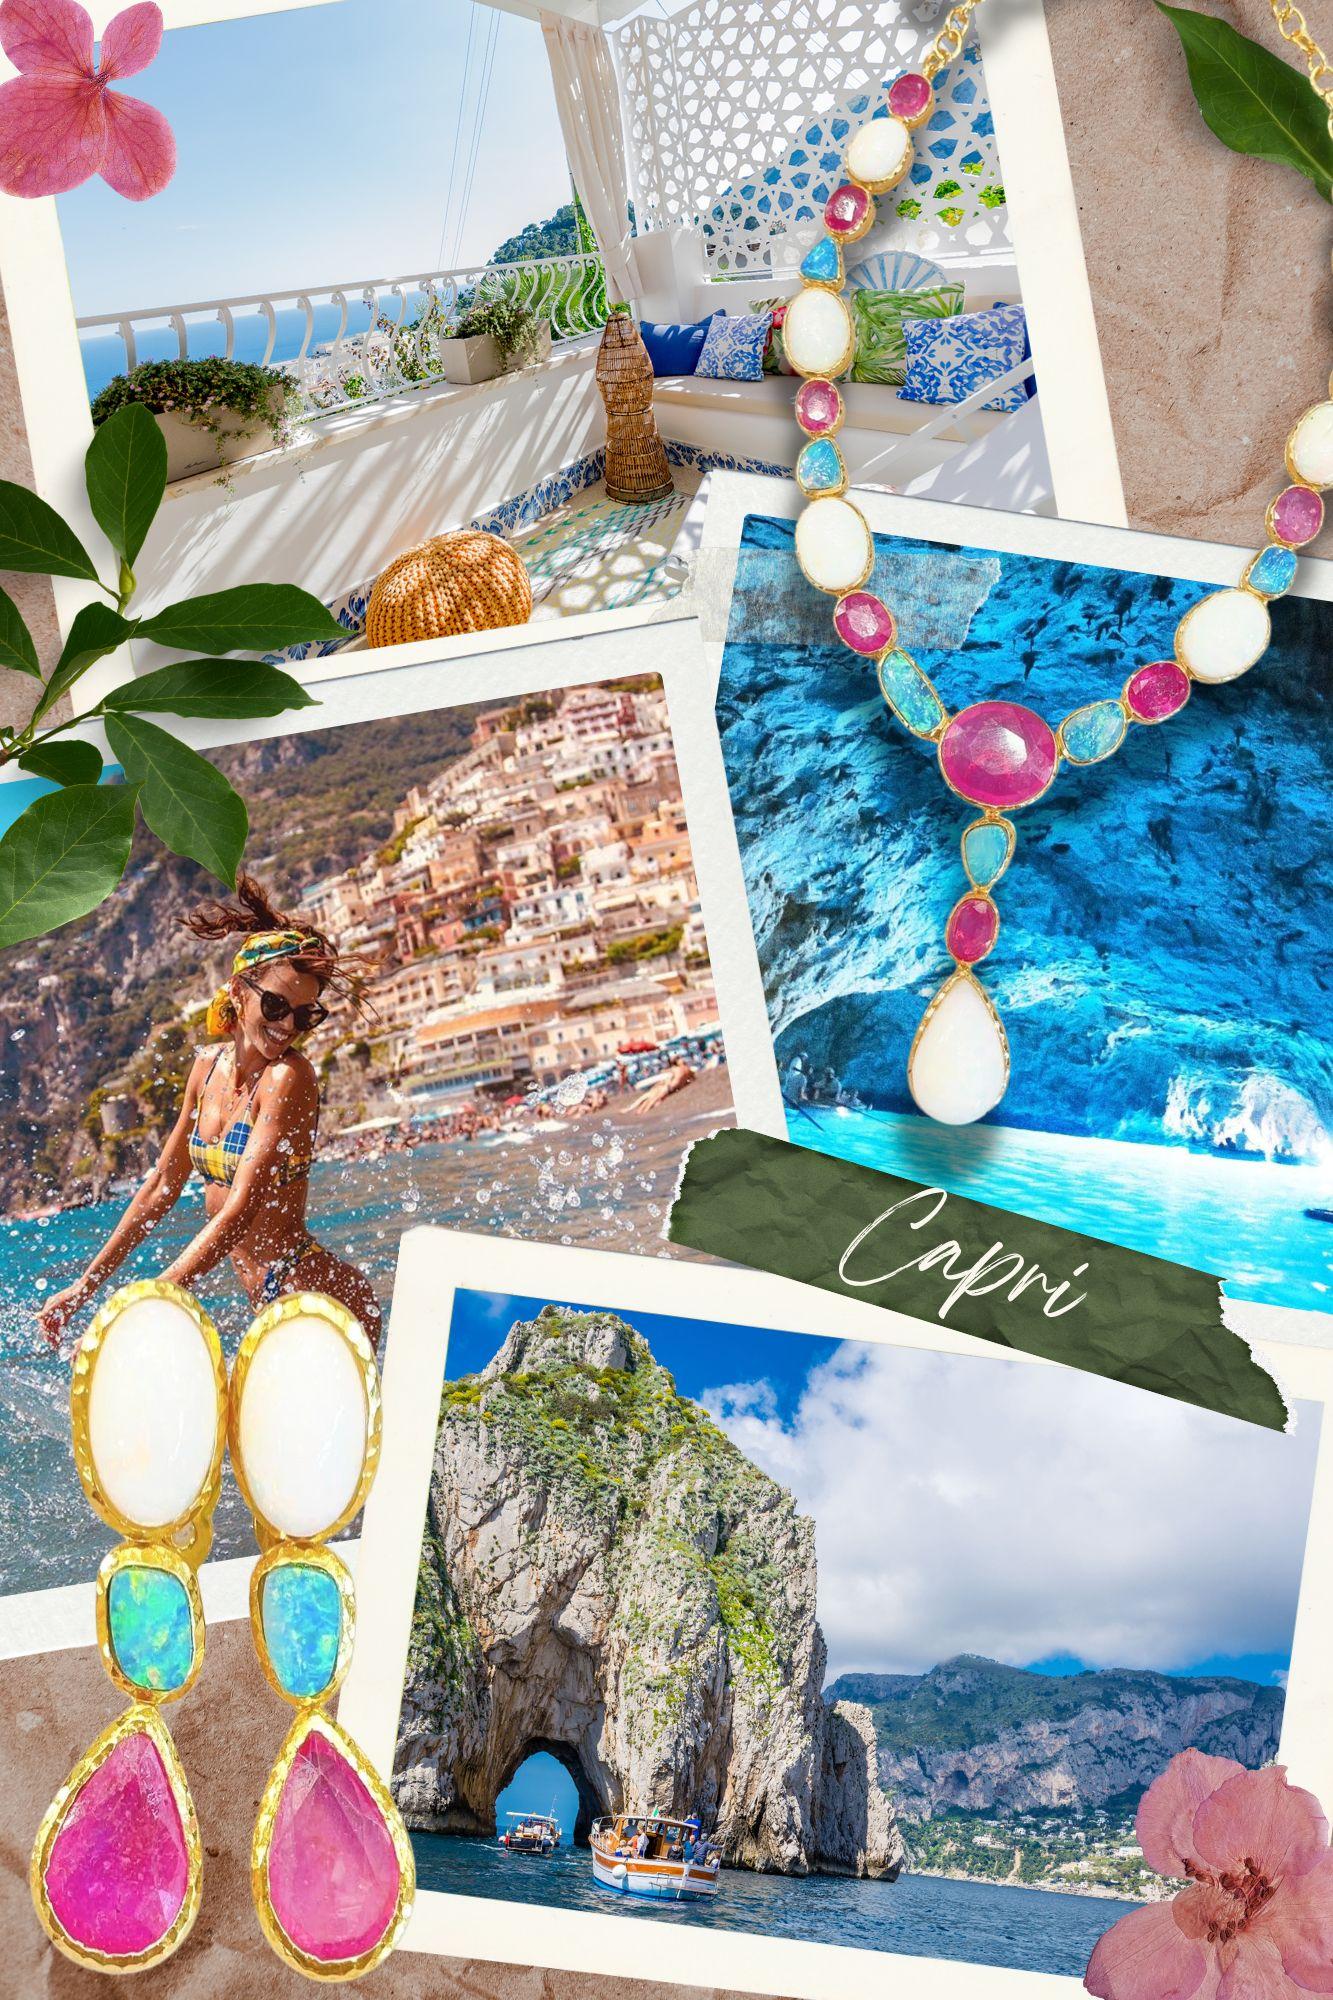 Bochic “Capri” Natural Ruby & Tanzanite Earrings Set in 22k Gold & Silver For Sale 4